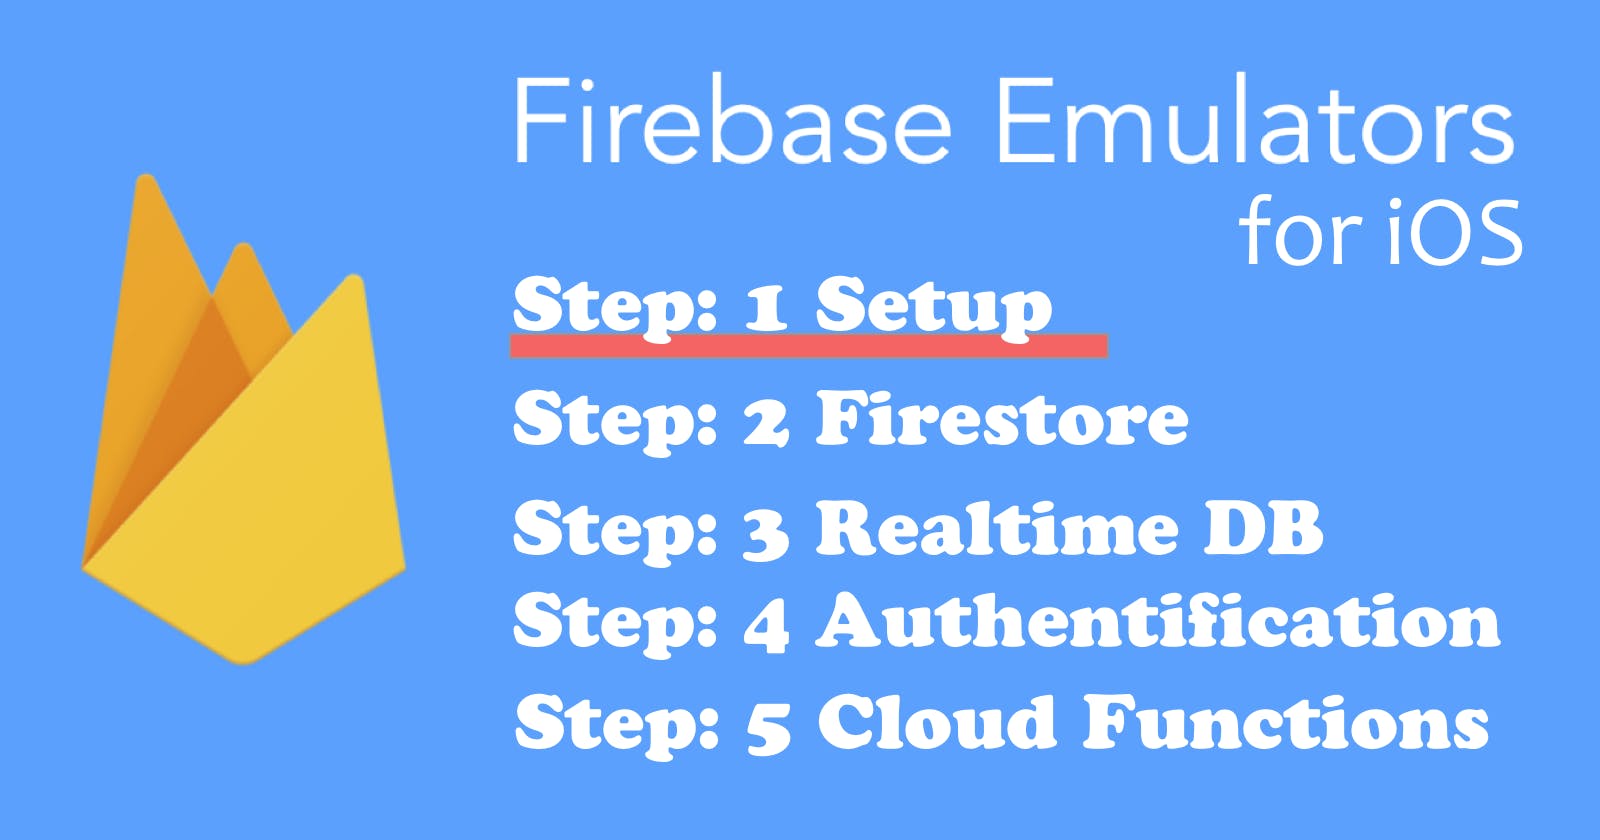 How to use Firebase Emulators iOS Part 1 - Setup